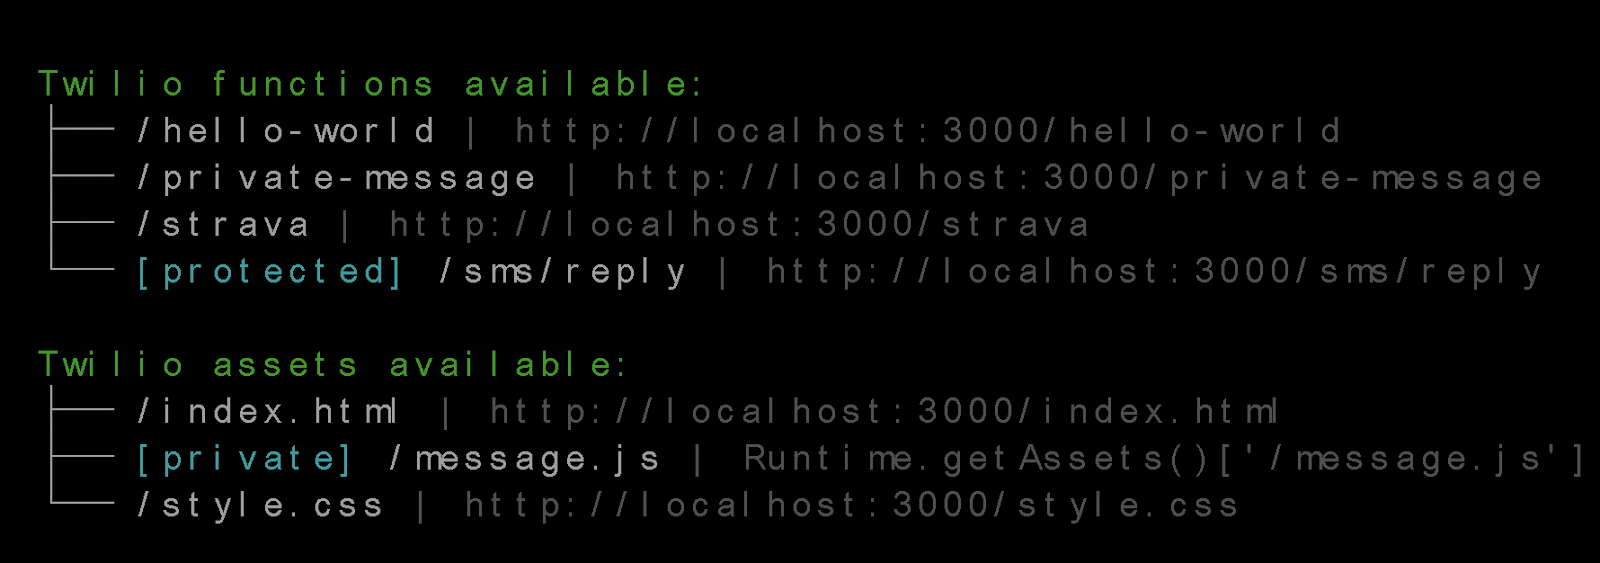 Twilio Function URLs in terminal